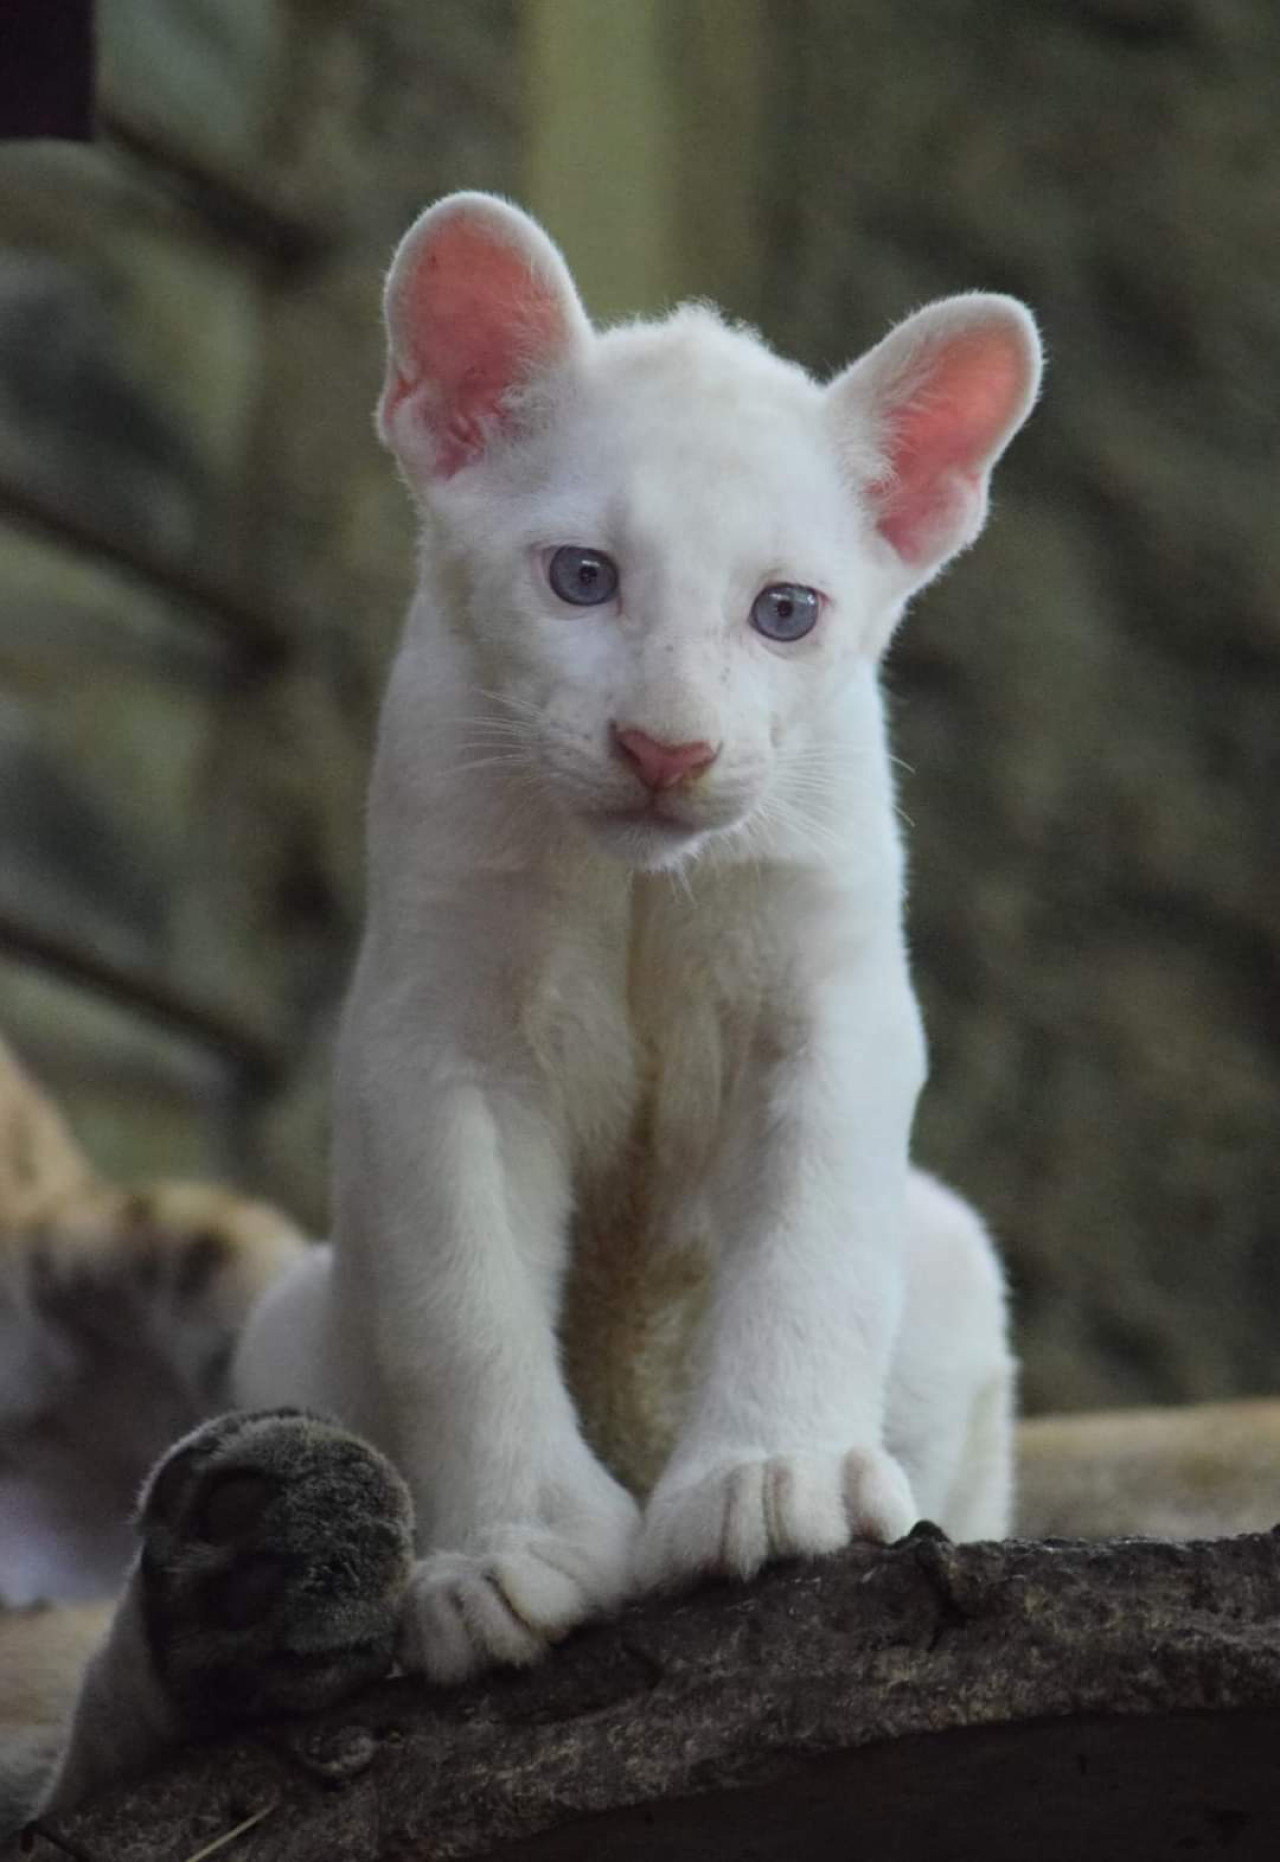 El primer puma albino nacido en cautiverio en Nicaragua. Foto: Twiter/@visitnicaragua